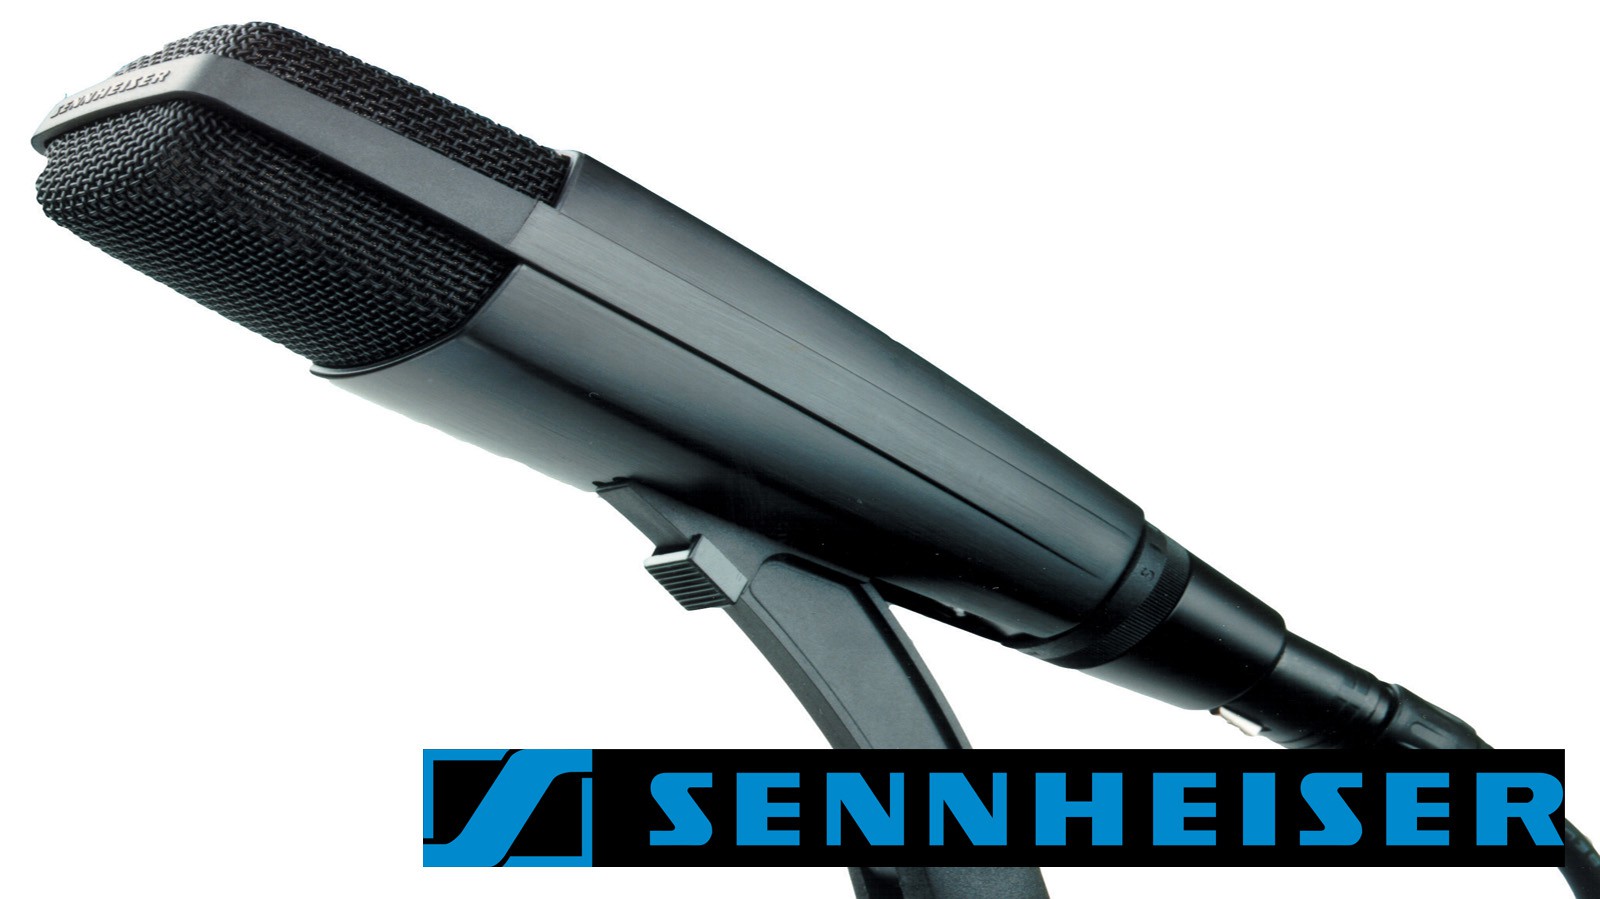 Sennheiser MD421 Microphone